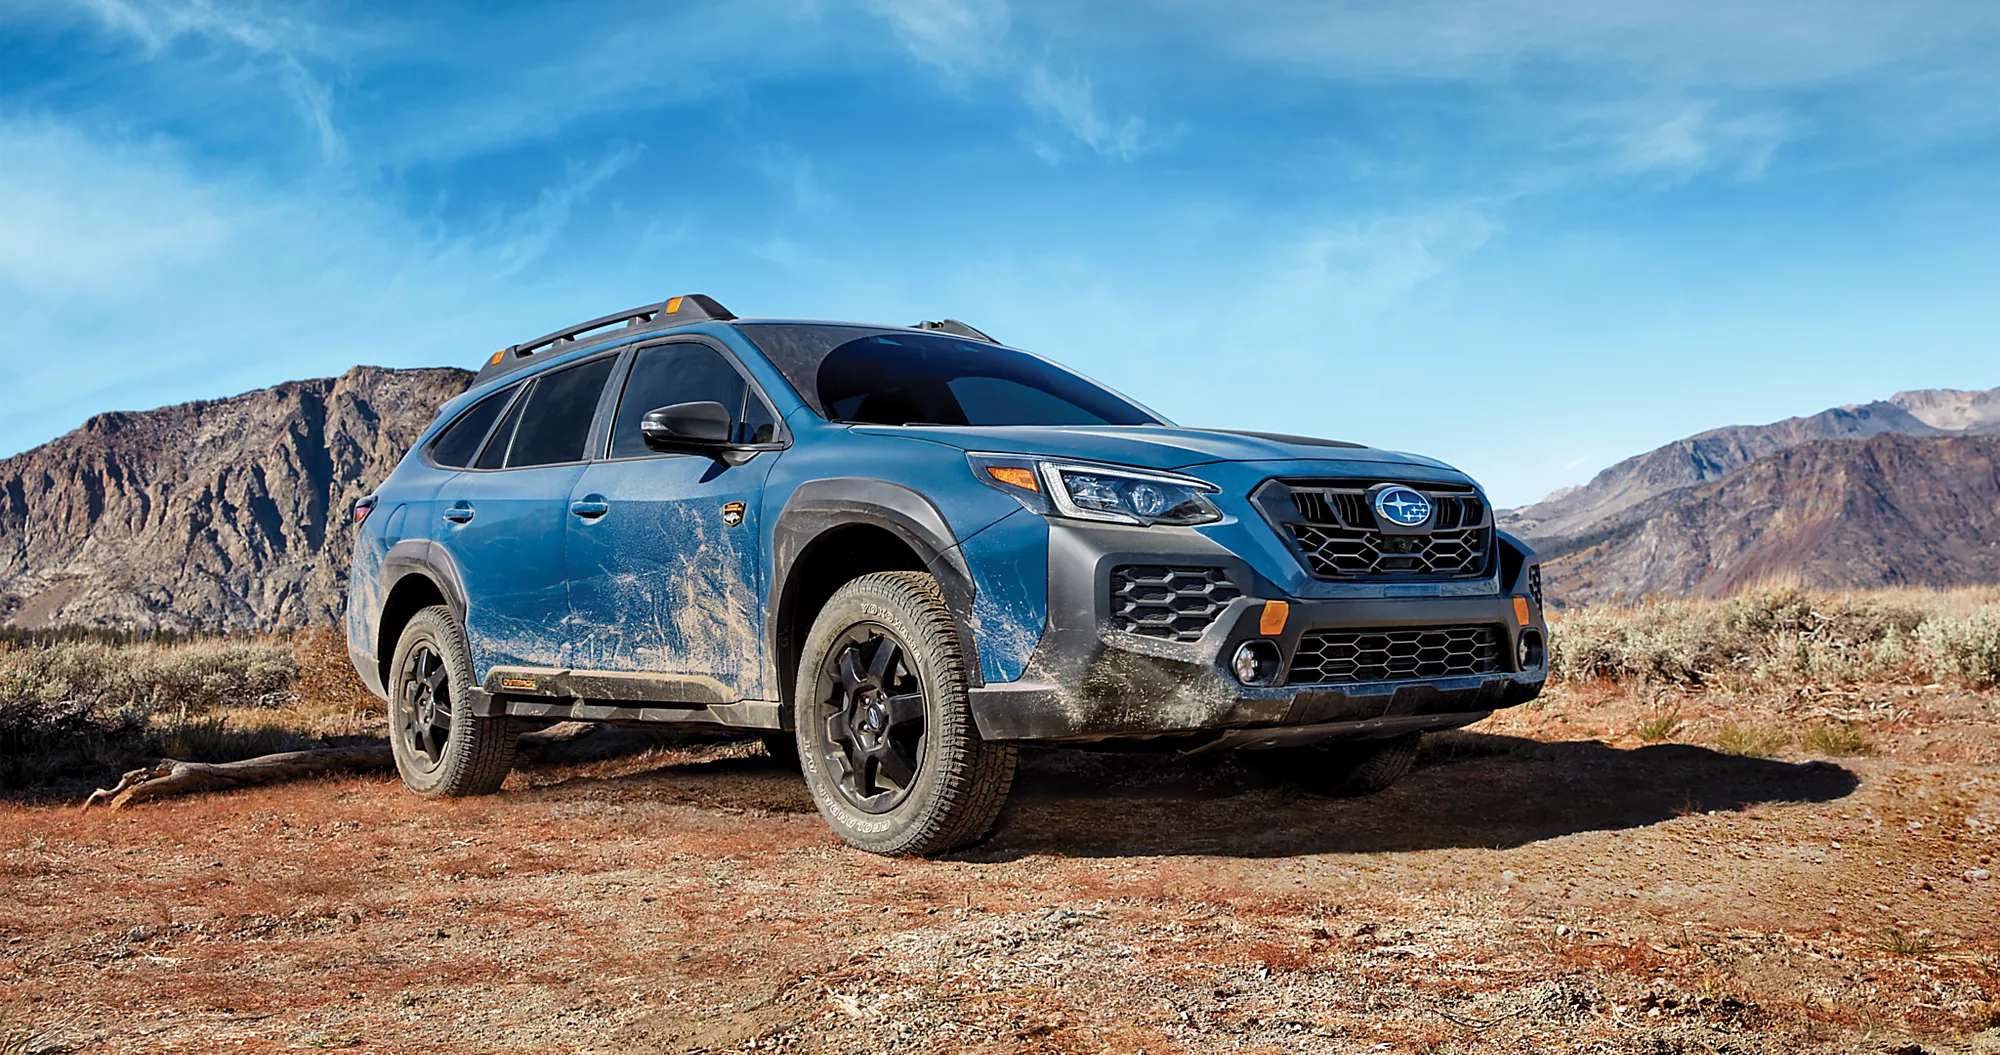  Geyser blue Subaru wilderness outback covered in dirt parked on dry desert terrain 